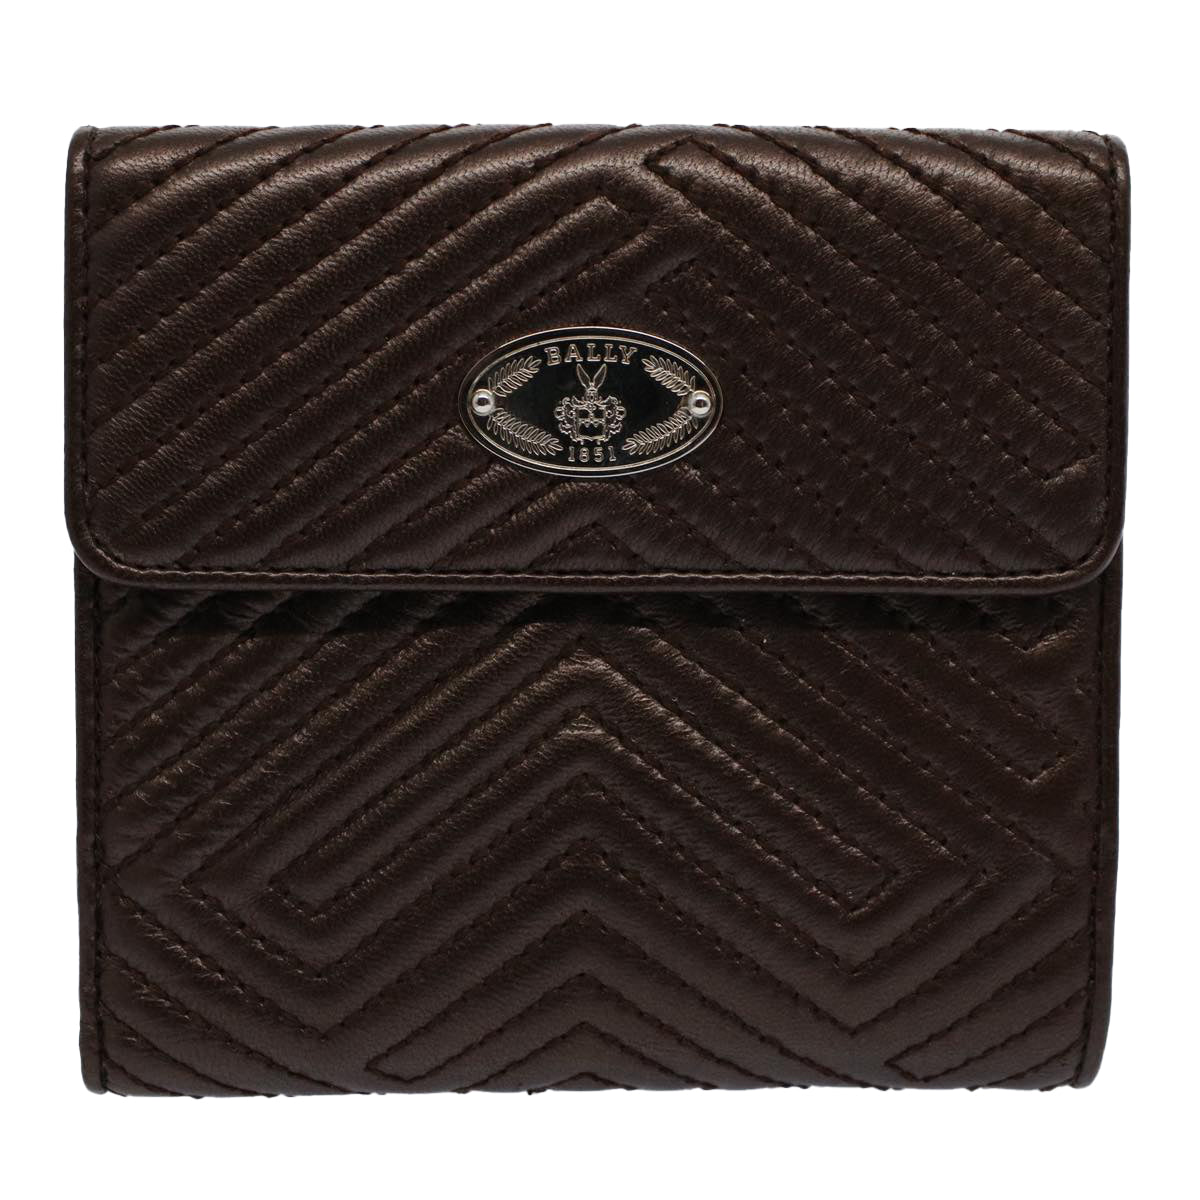 BVLGARI BALLY Cartier Wallet Leather 3Set Black Brown beige Auth ac2488 - 0